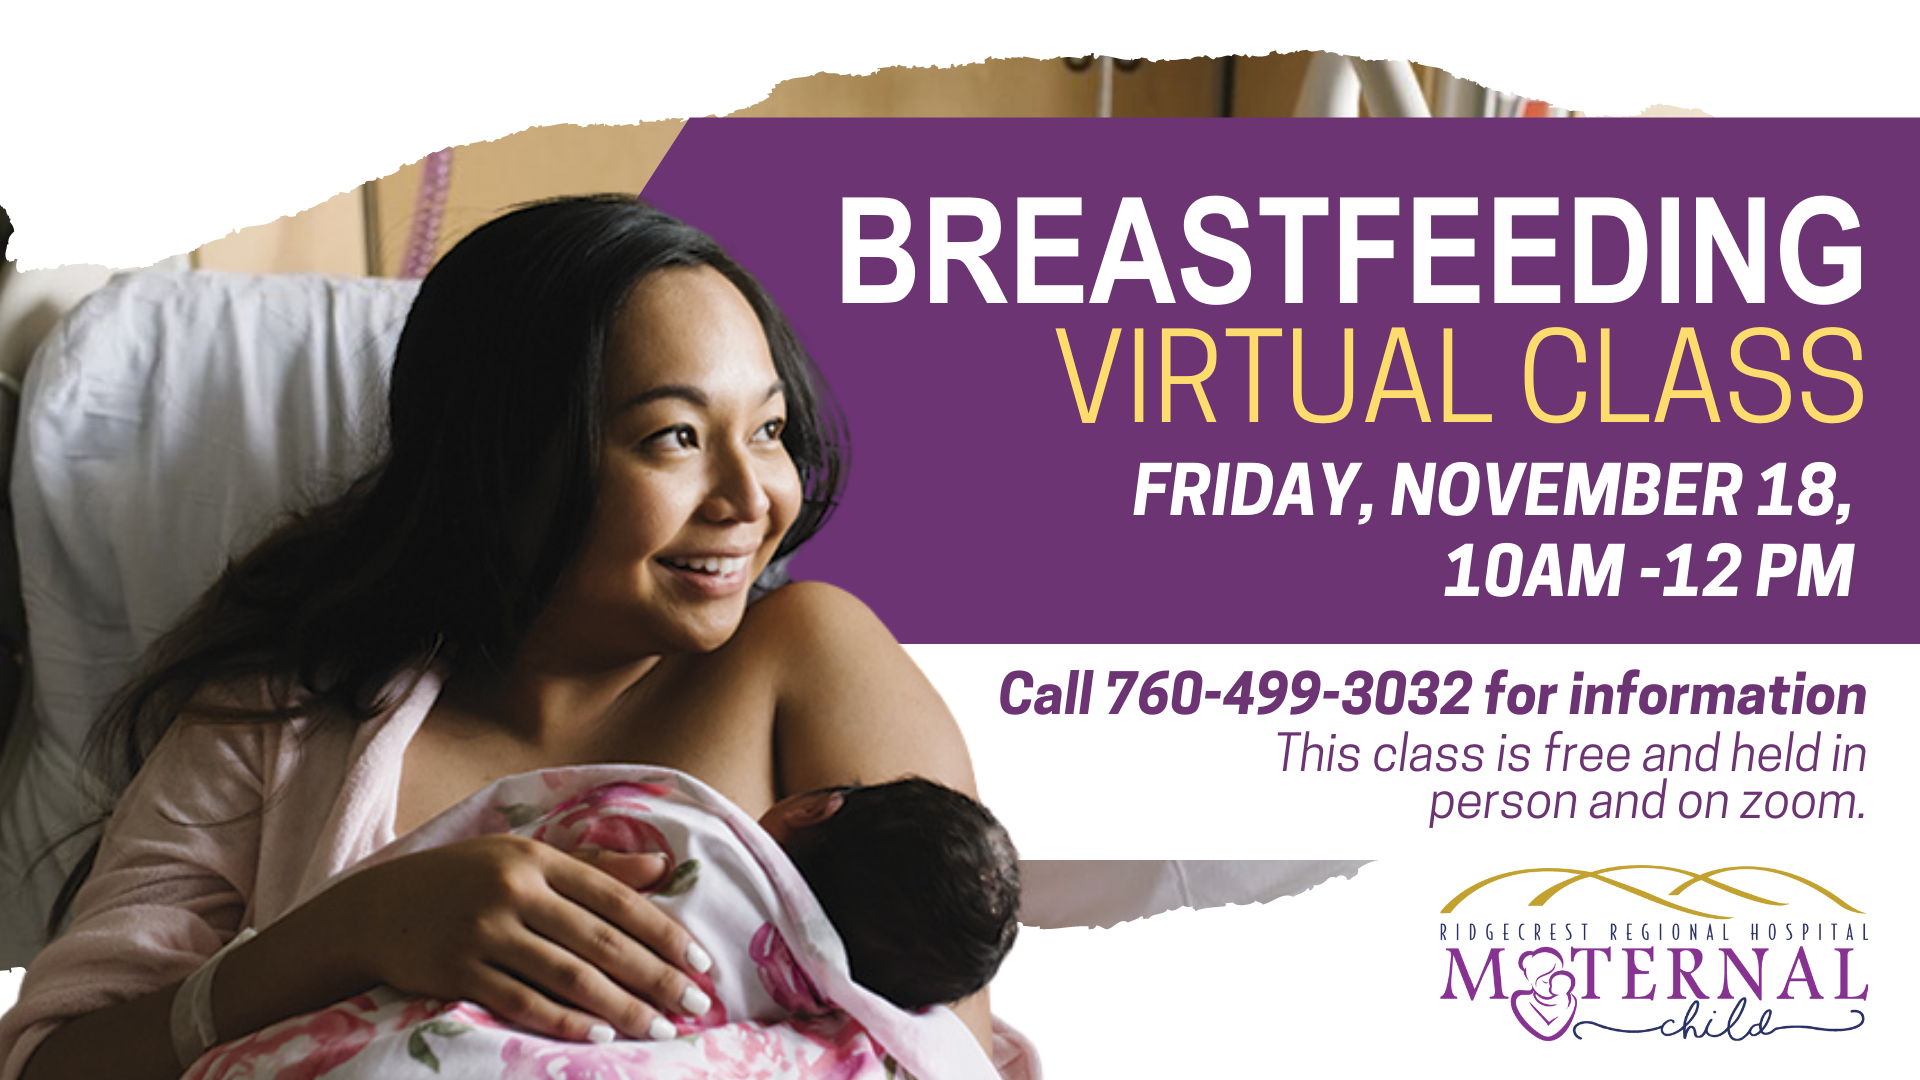 Virtual Breastfeeding Class